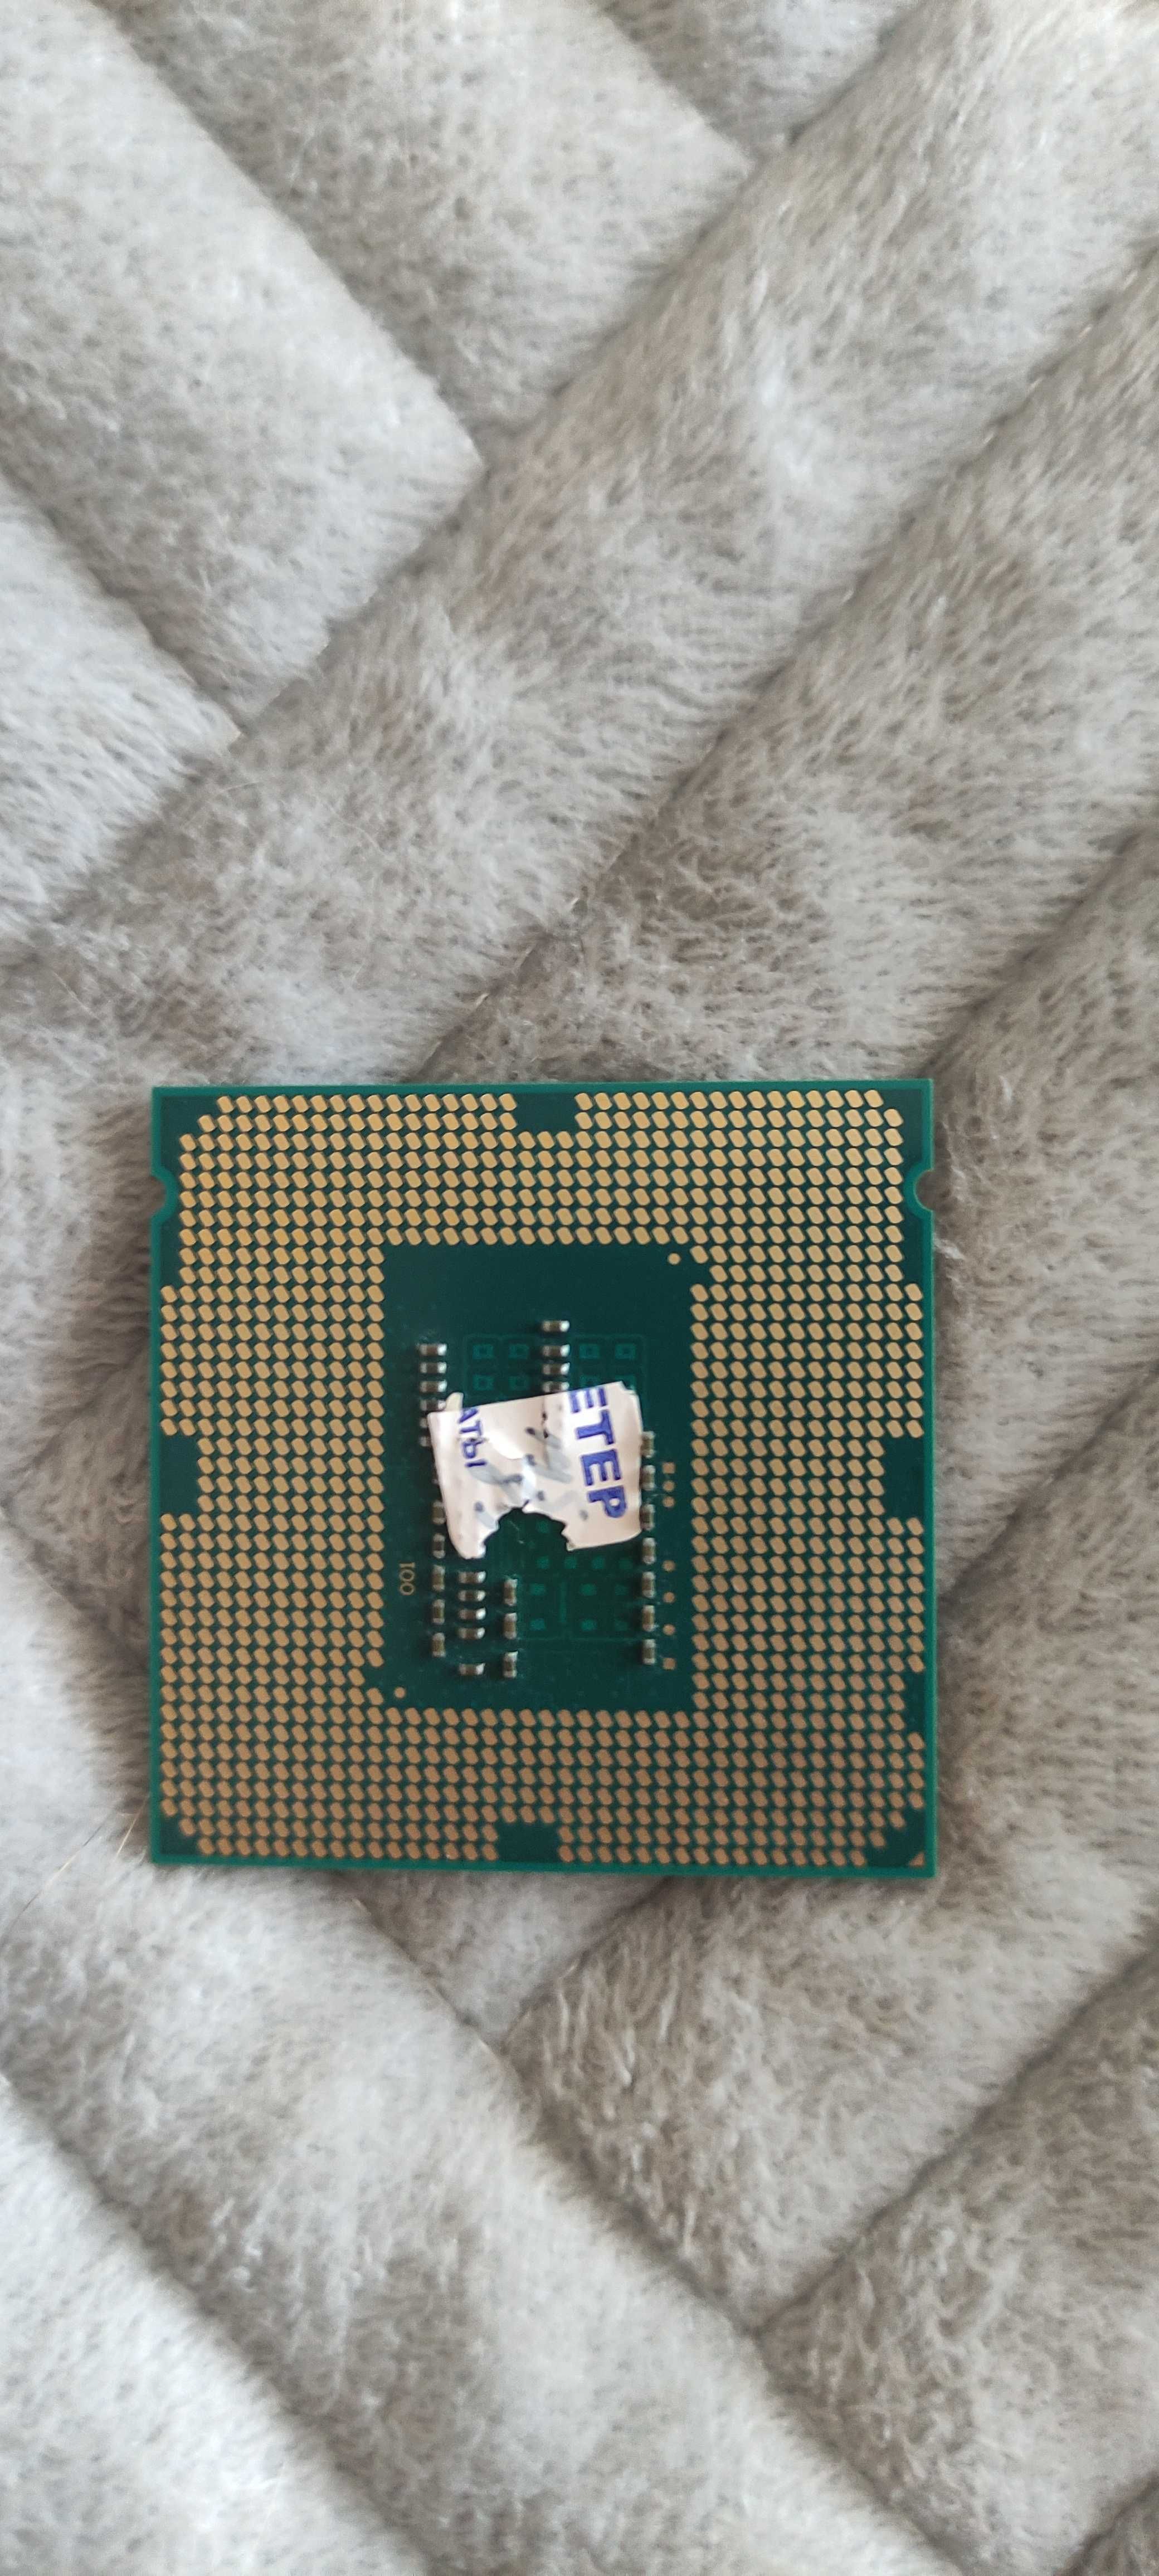 Процессор i3 4150